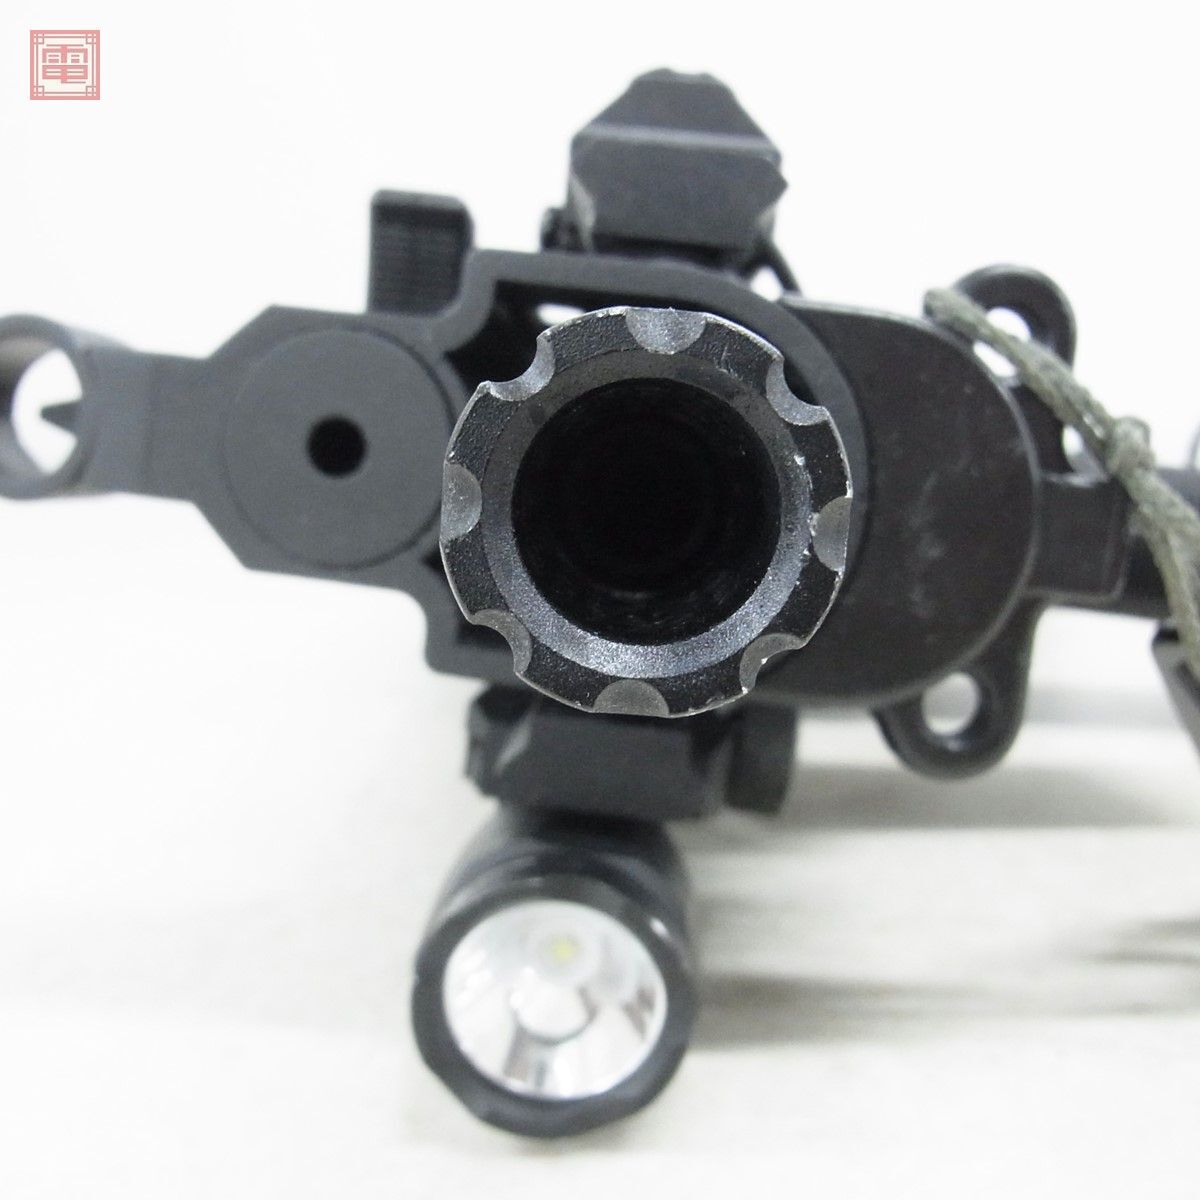 S&T electric gun UMP 45 electron trigger . speed custom SUREFIRE type flashlight attaching present condition goods [20